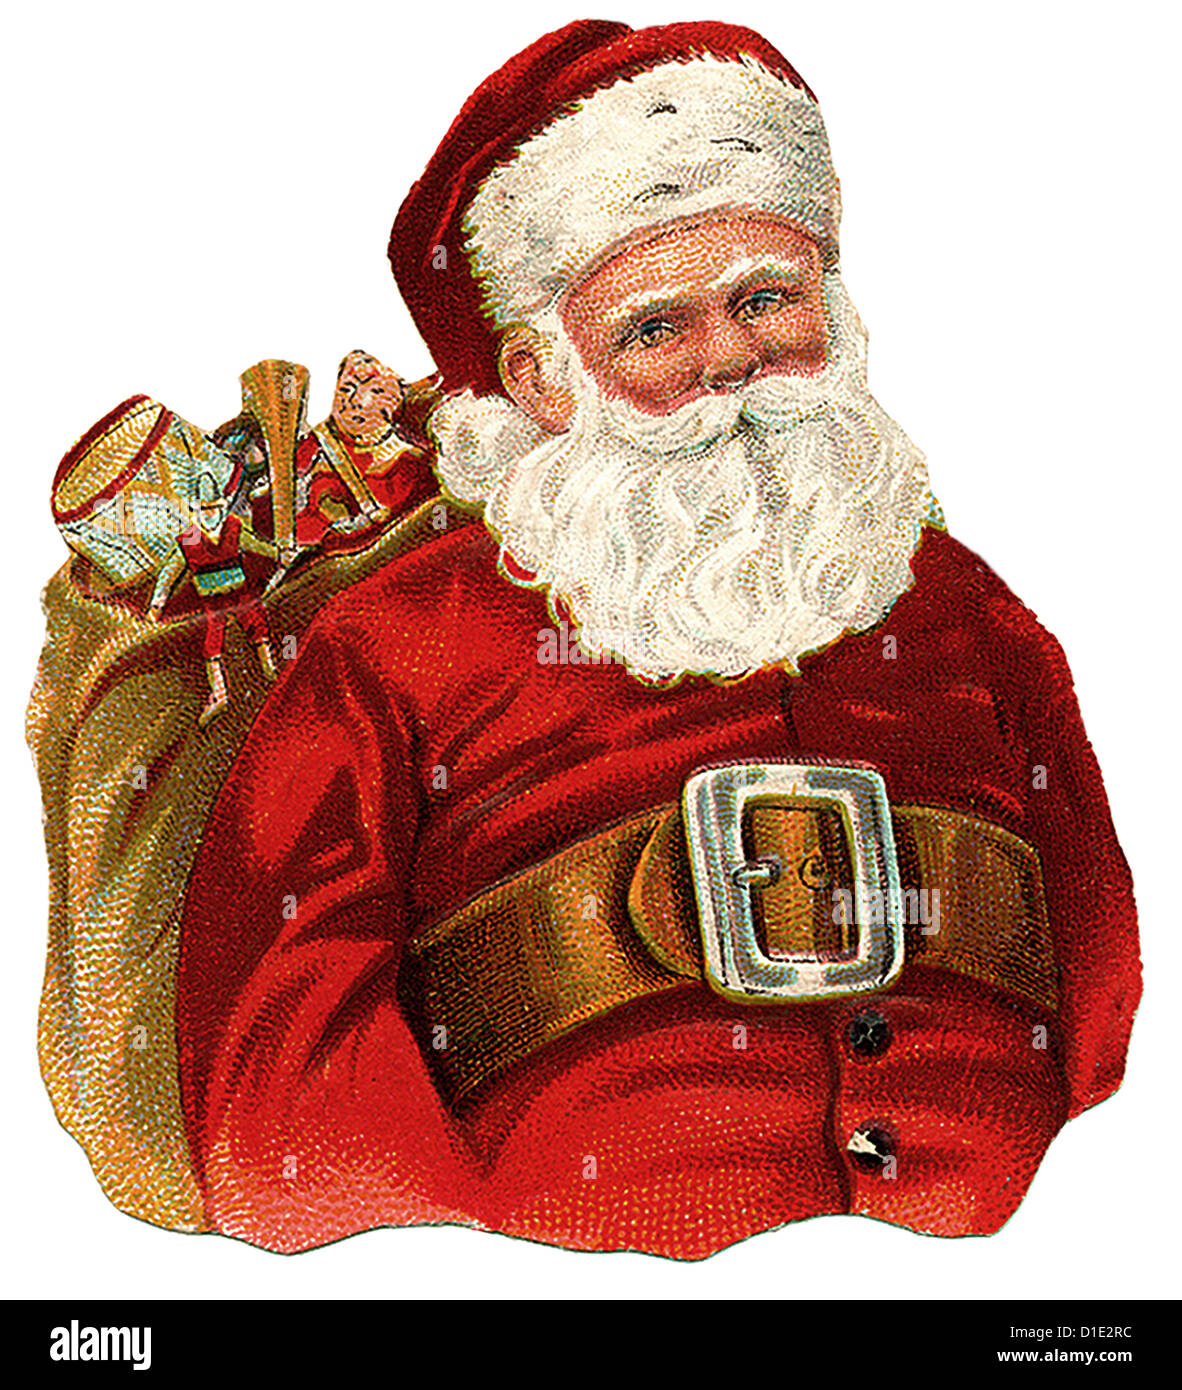 Santa Claus upper body bag full of gifts Stock Photo